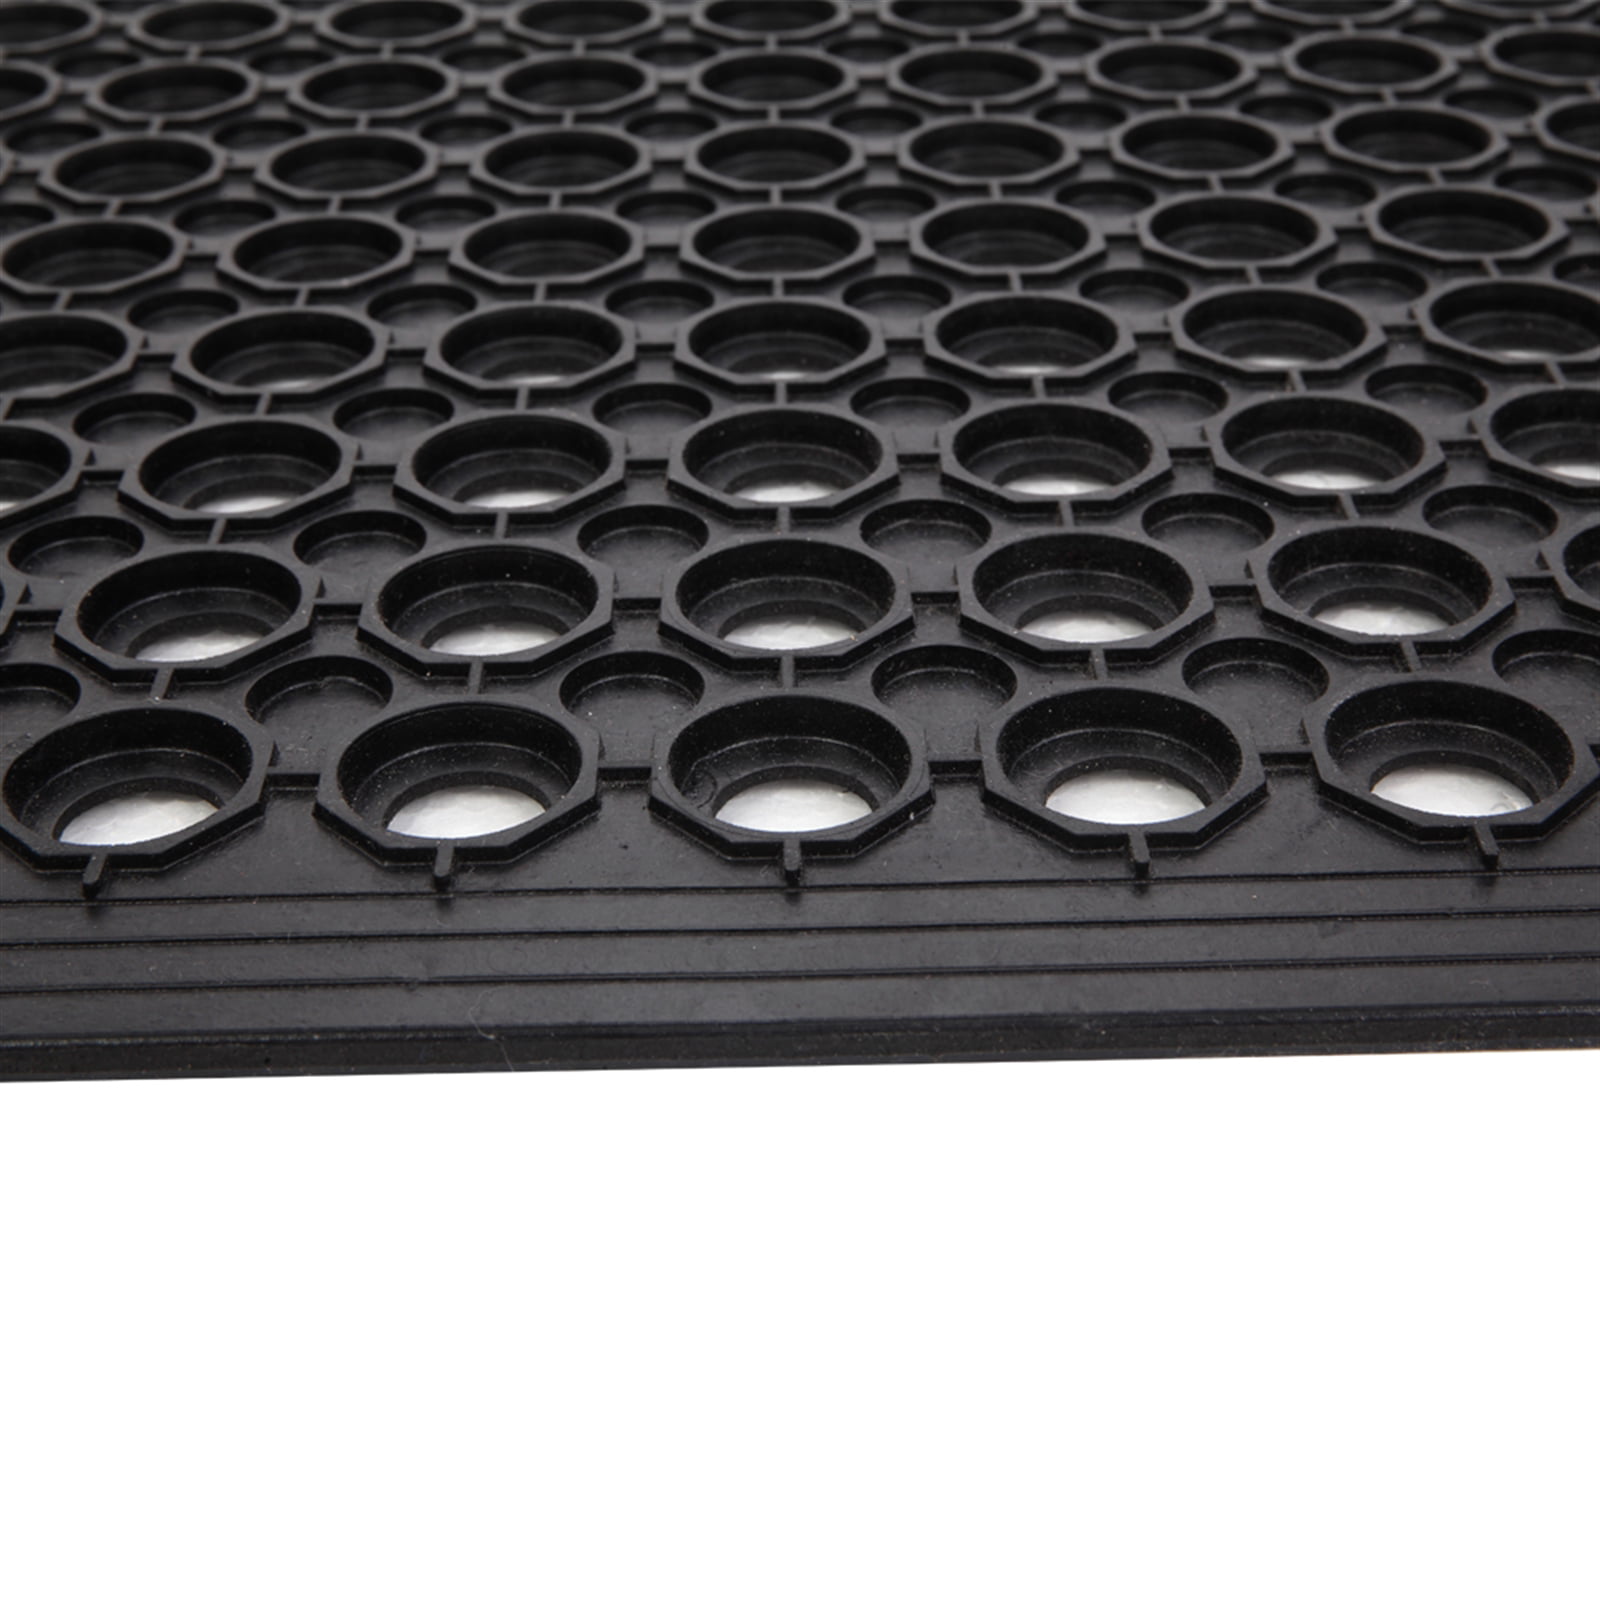 Uniboho Outdoor Rubber Floor Mat Anti Slip Commercial Resturant Kitchen Mat  Rubber Drainage Mat 60 x 35 Inch Heavy Duty Mat for Garage Garden Indoor